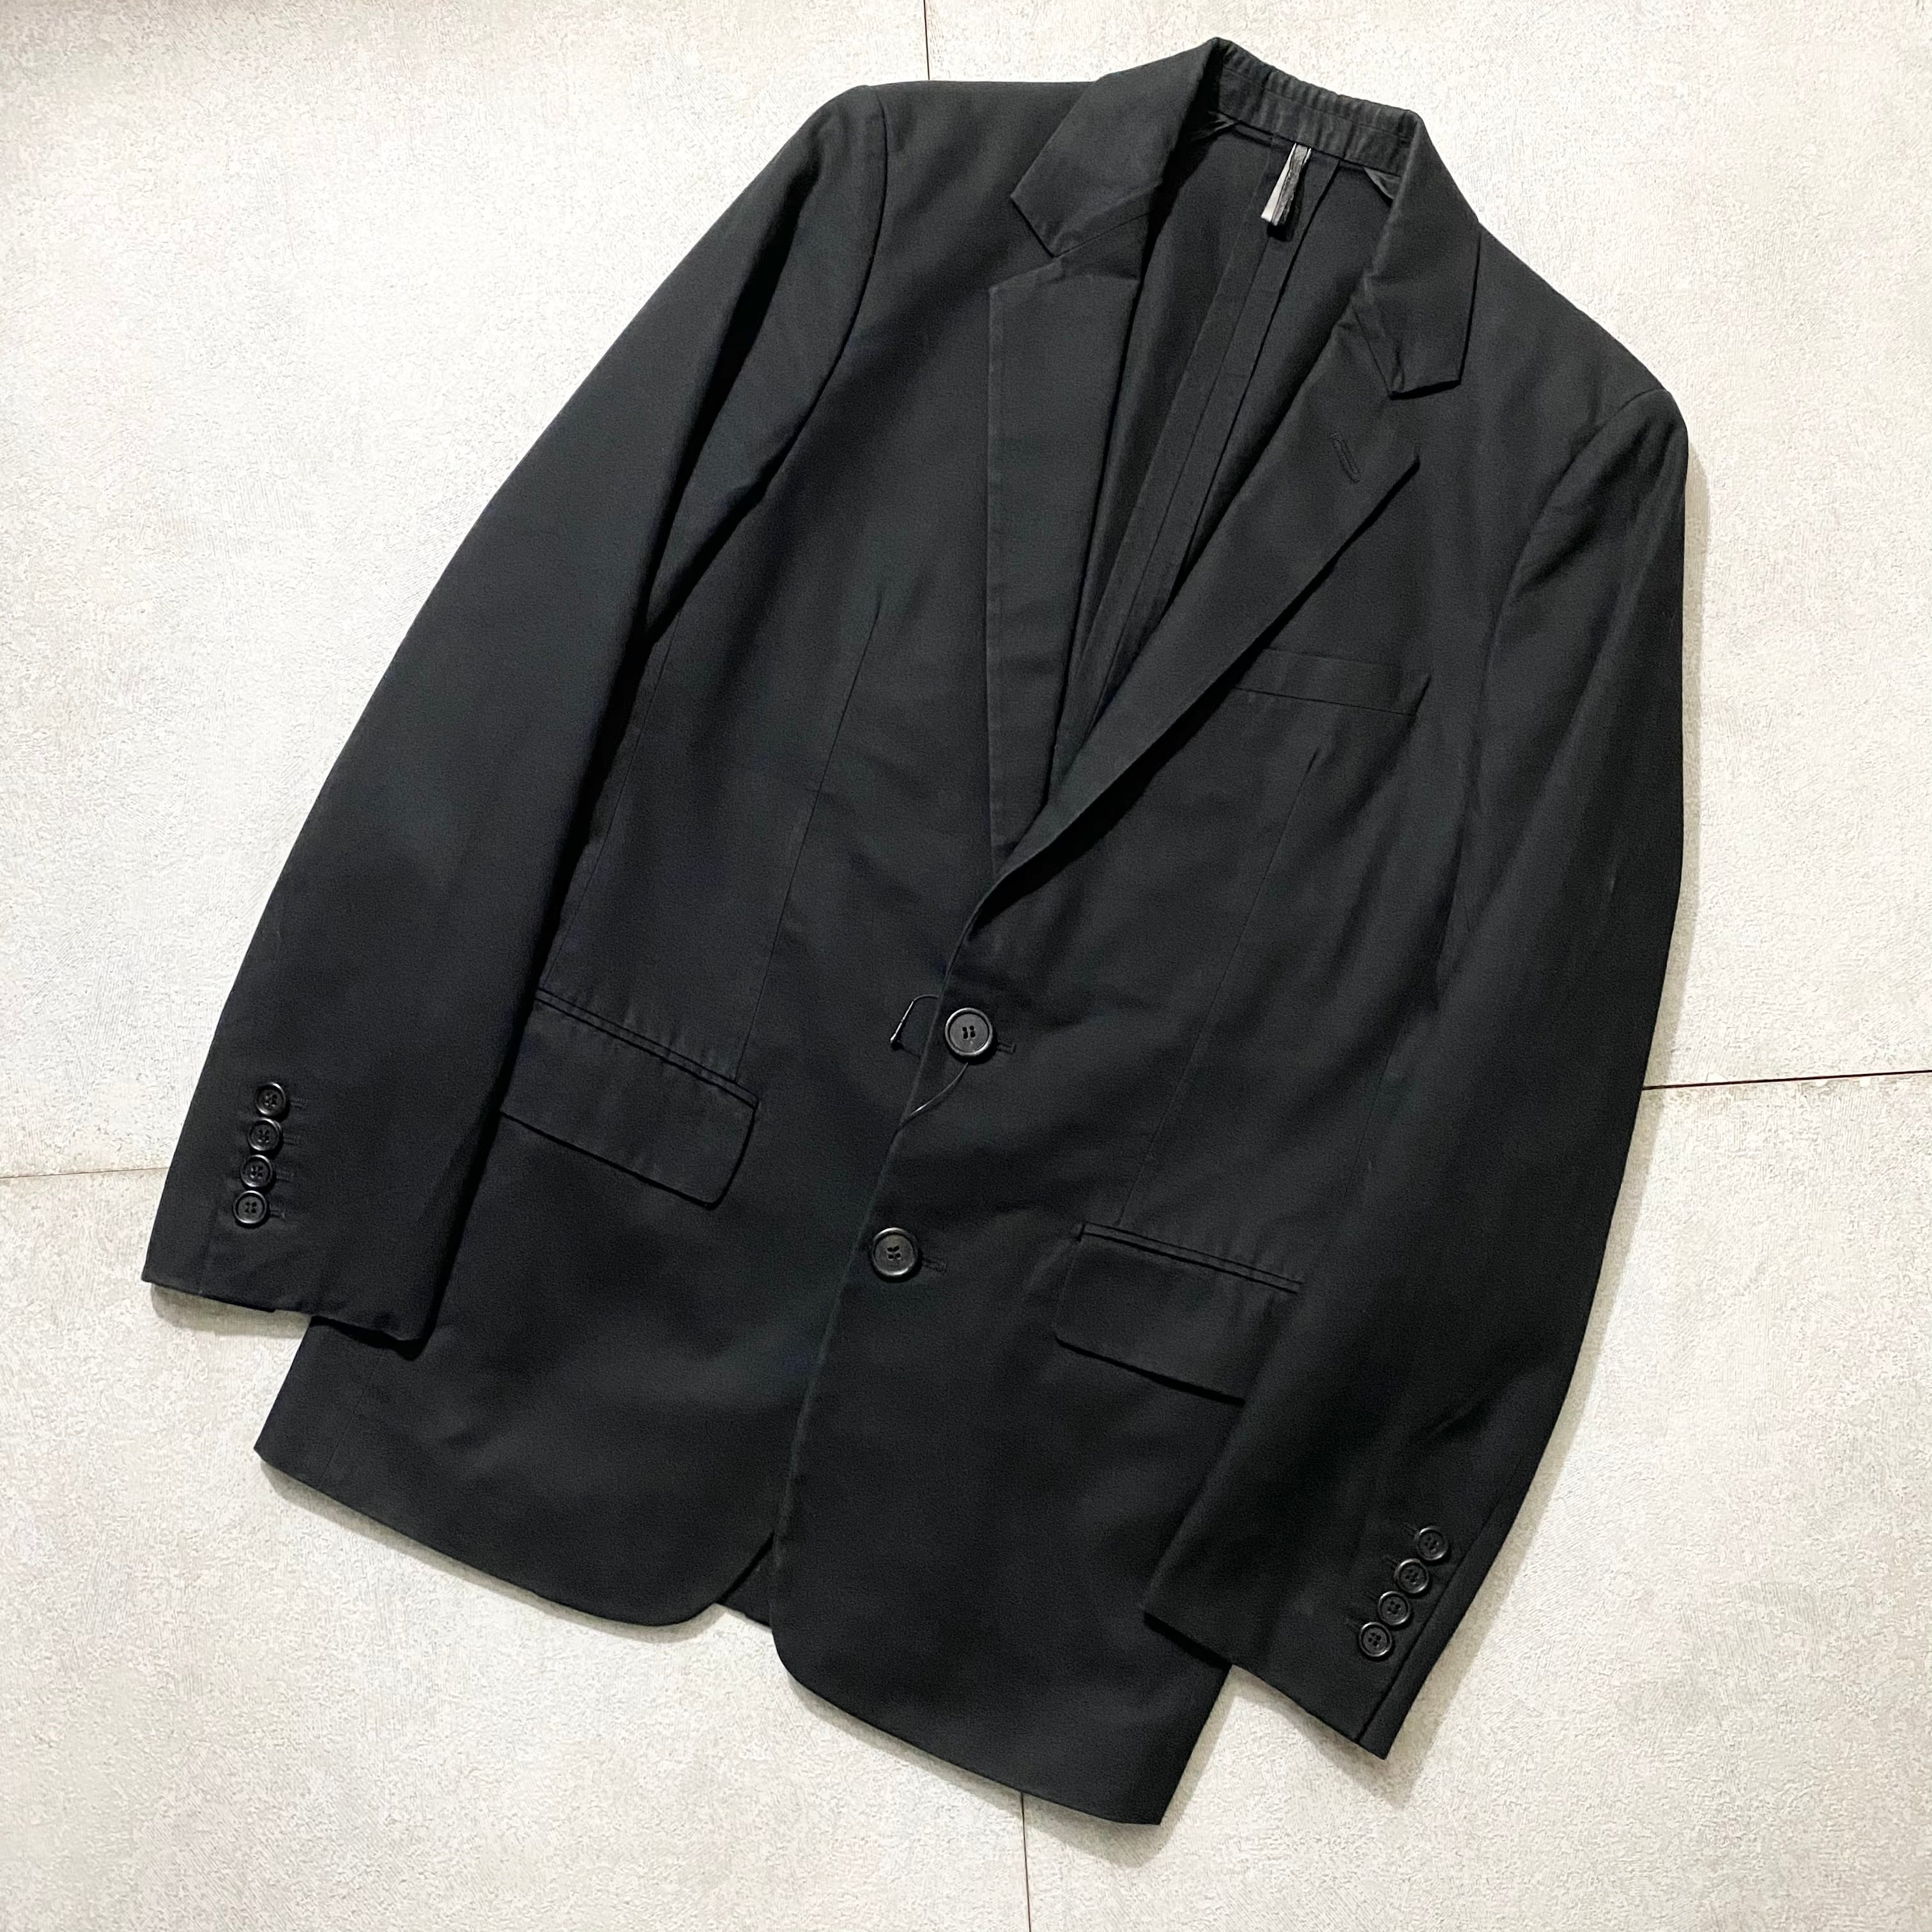 Dior tailor jacket